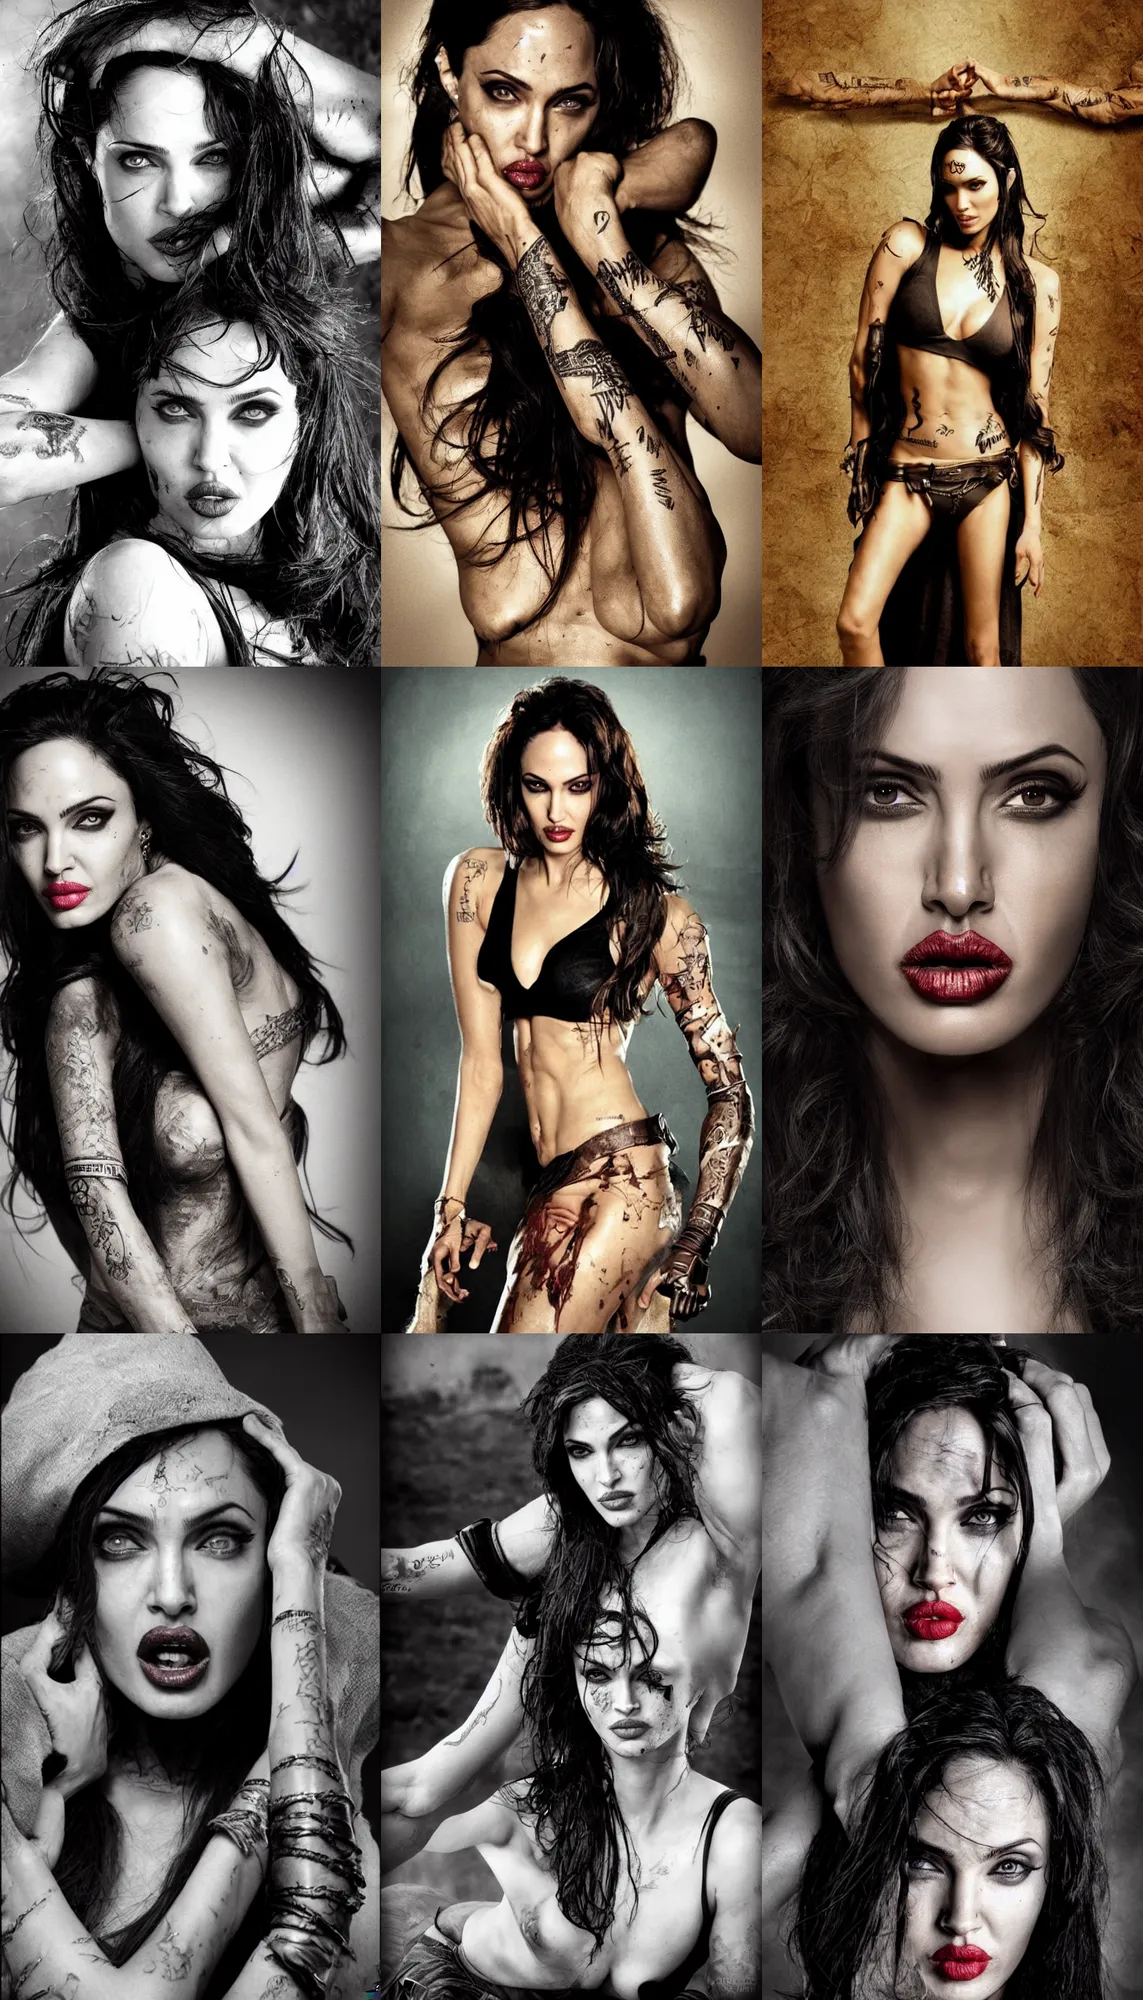 Prompt: photo, fighting, mythic wraith, action, provocative indian, nose of Angelina Jolie, lips of Megan Fox, award winning photography by Leonardo Espina